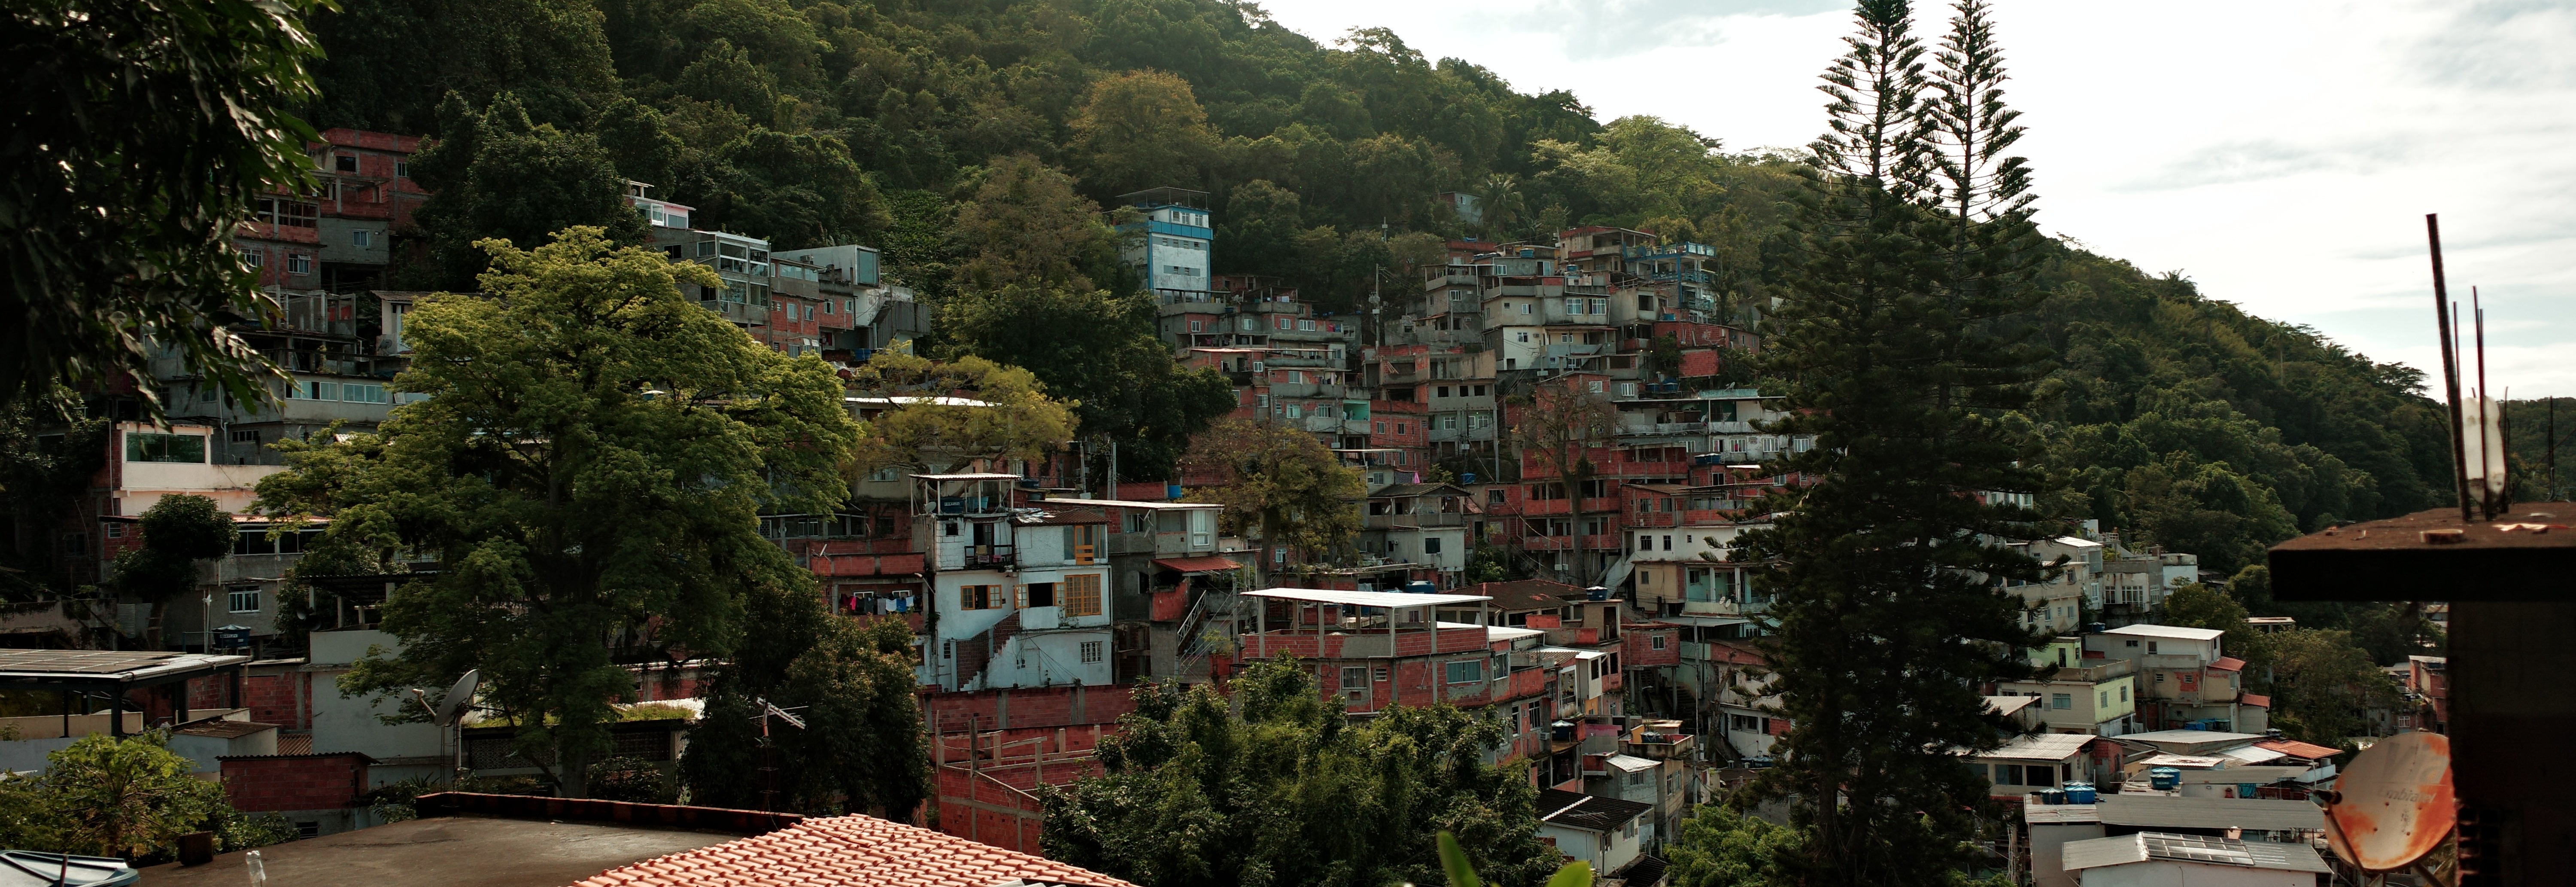 Community Project at Favela Babilonia, Rio de Janeiro-1